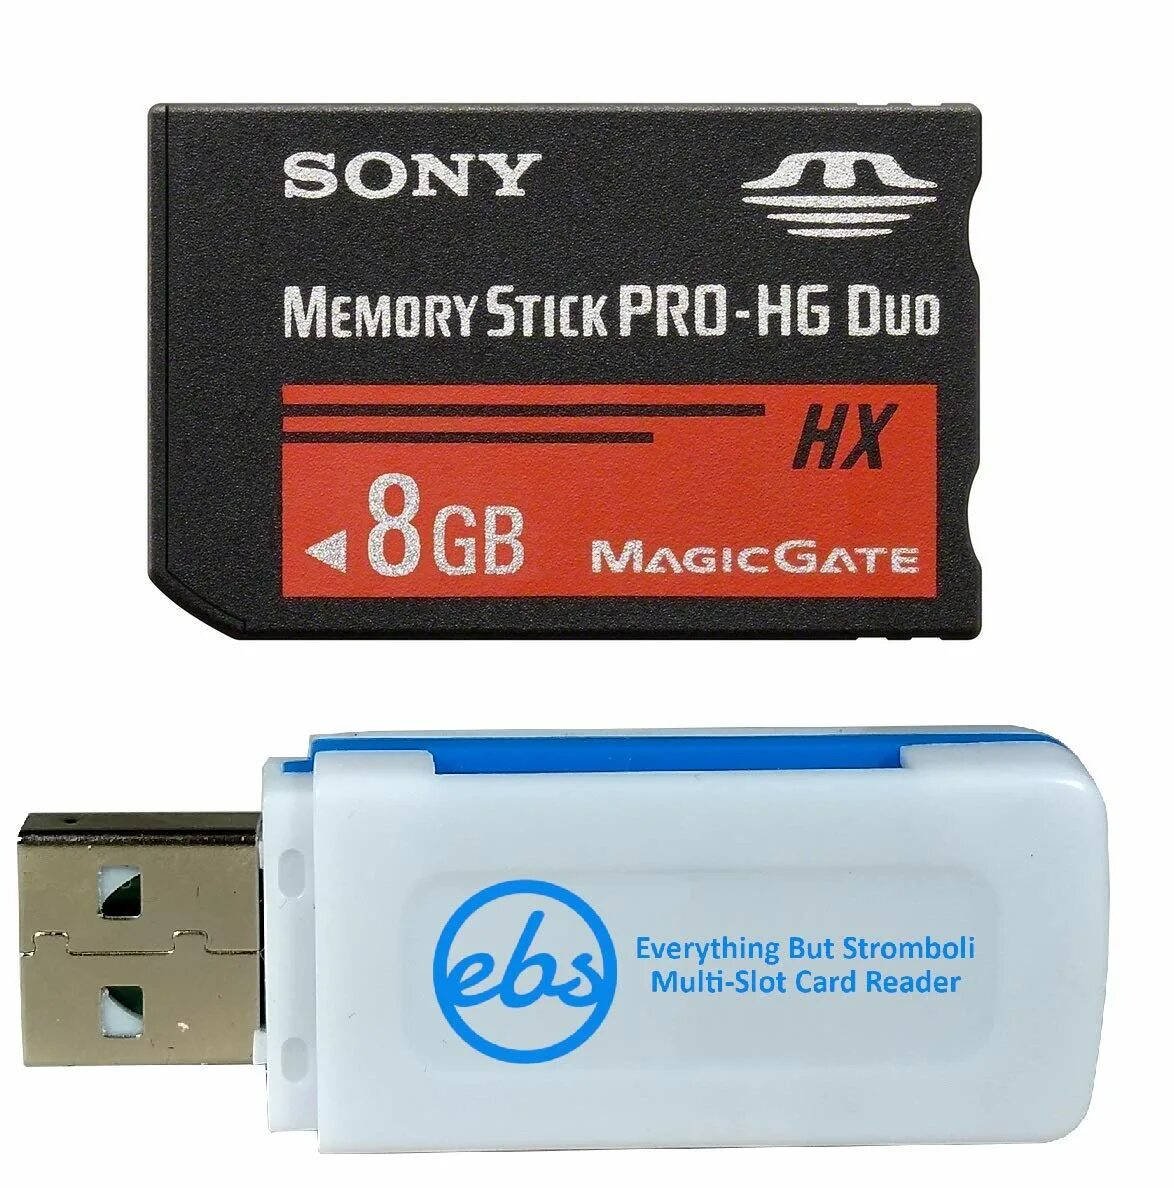 Pro duo купить. Sony Memory Stick Pro HG Duo 8 GB. Sony Memory Stick Pro HG Duo 16 GB. Флешка Memory Stick Pro-HG Duo. Memory Stick Sony 8 GB.